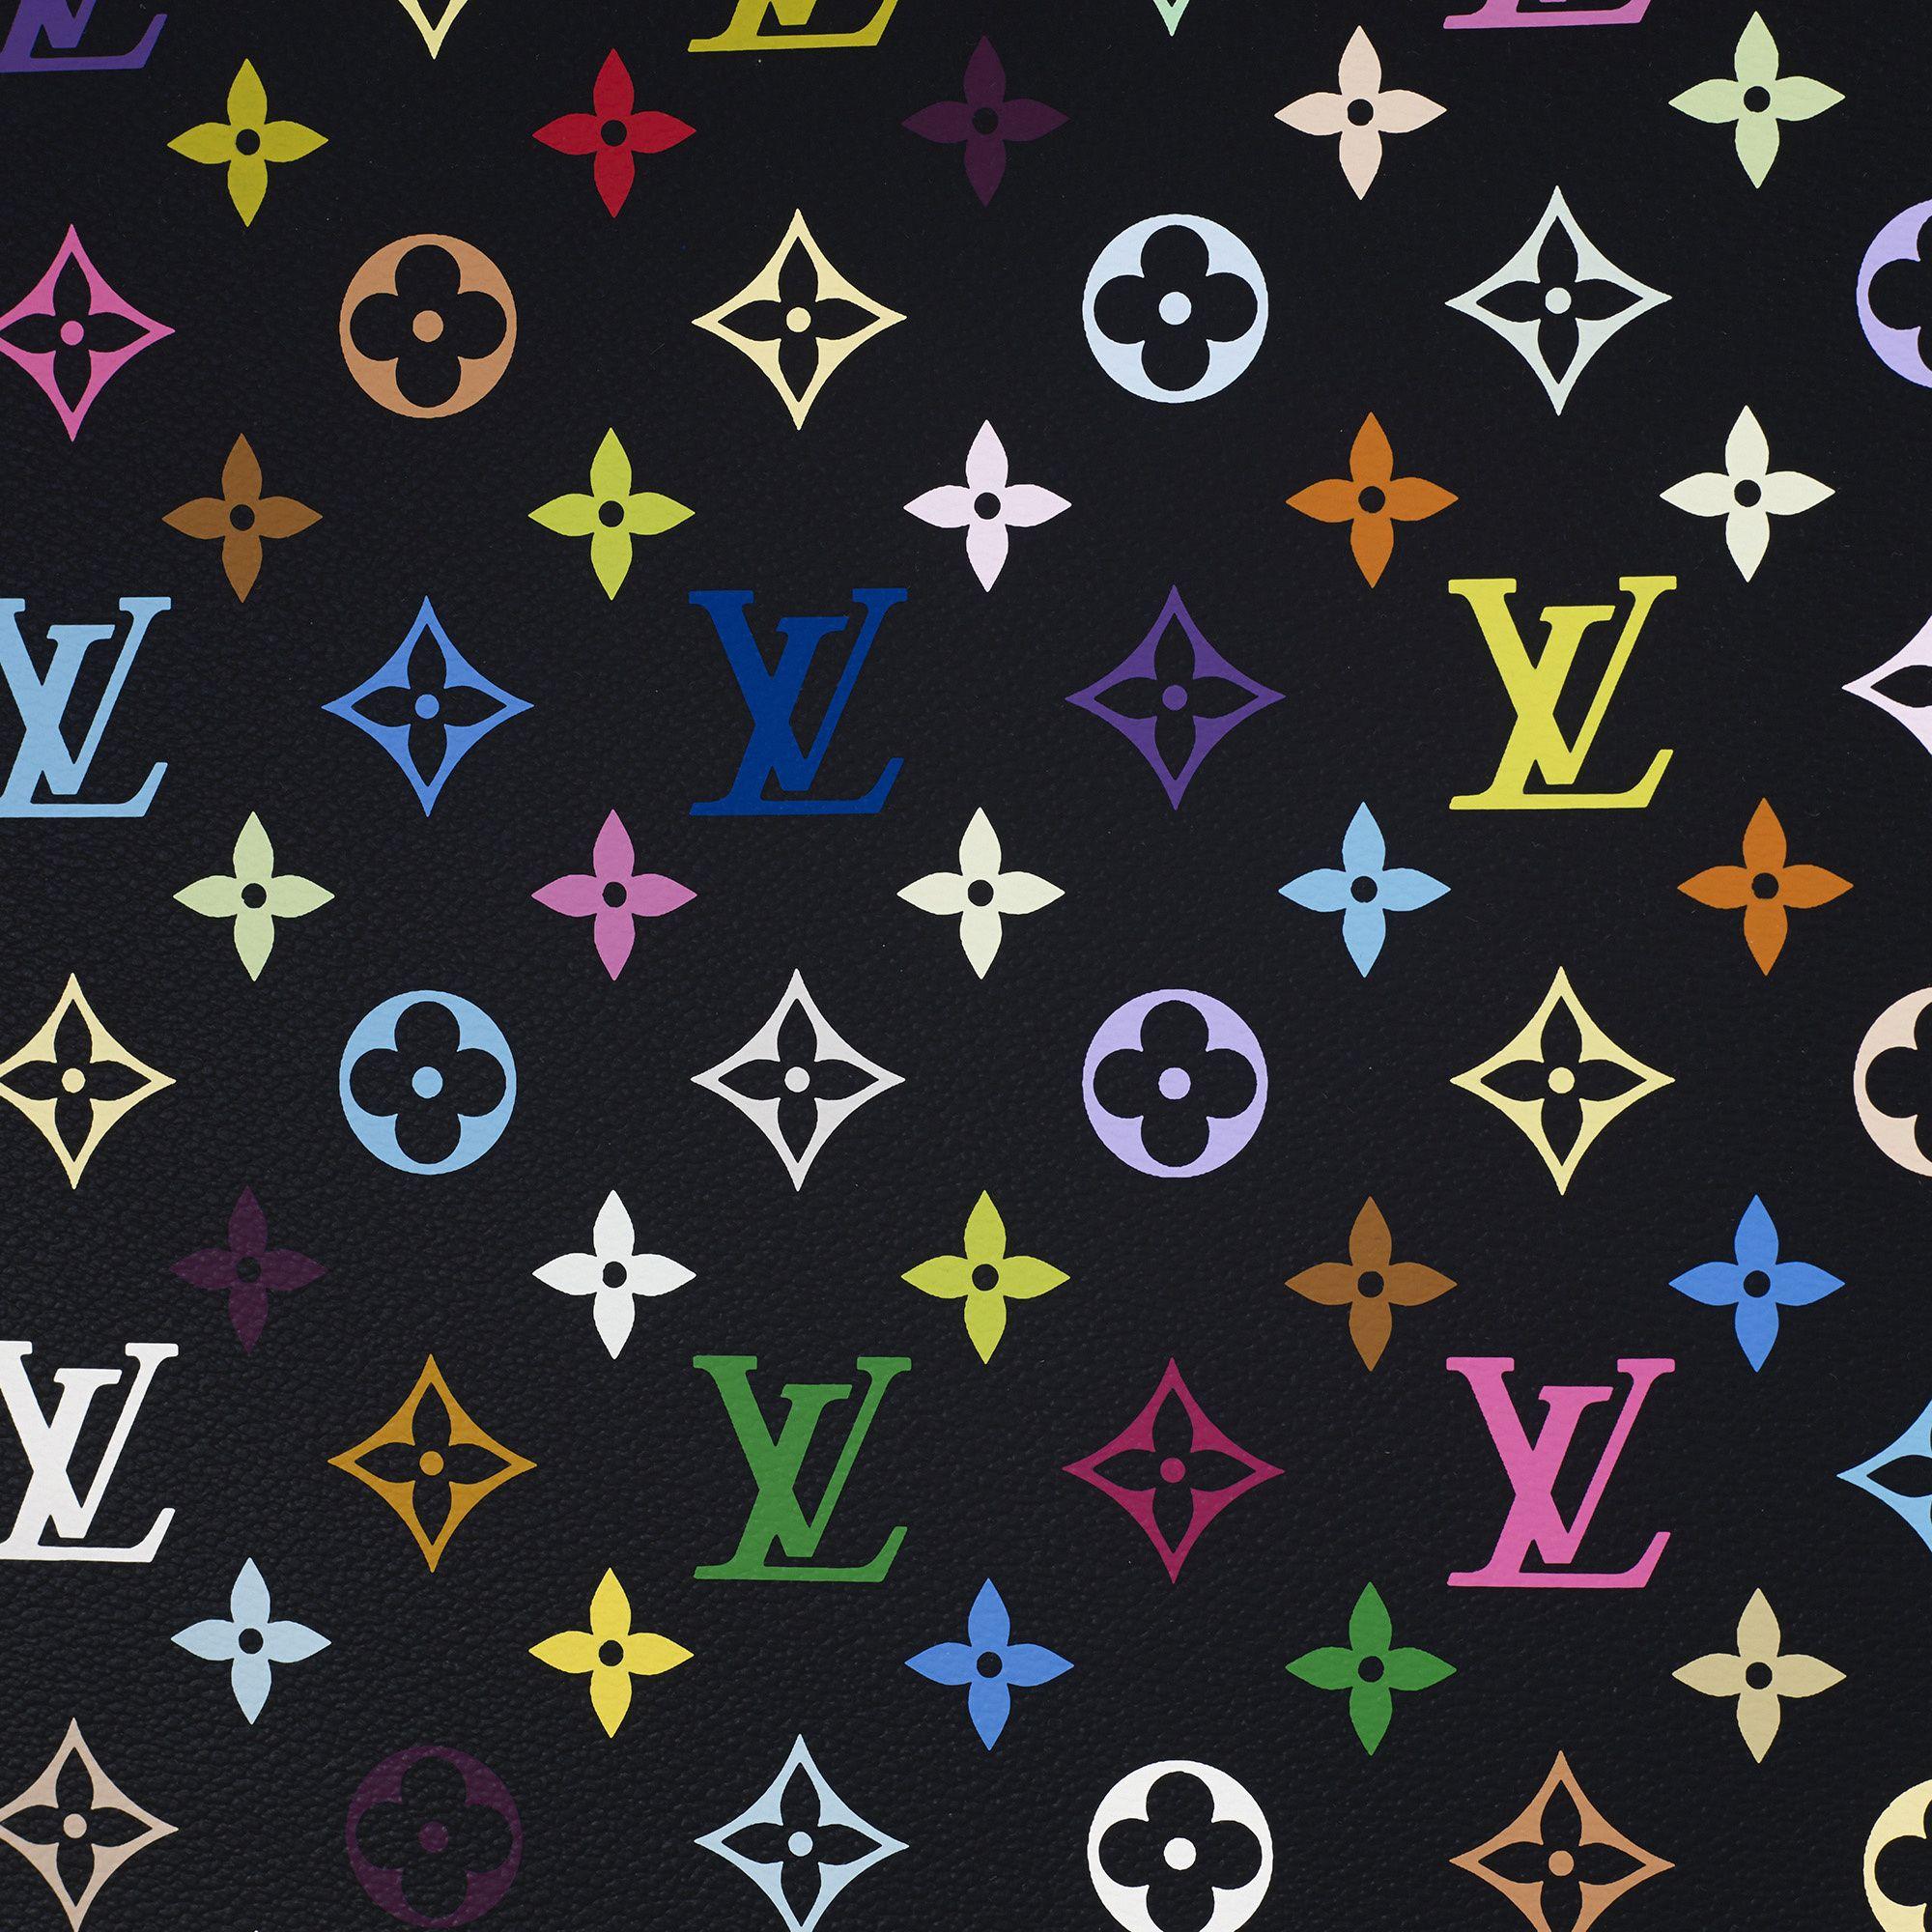 Louis+Vuitton+N%C3%A9oNo%C3%A9+Handbag+MM+Brown+Leather for sale online